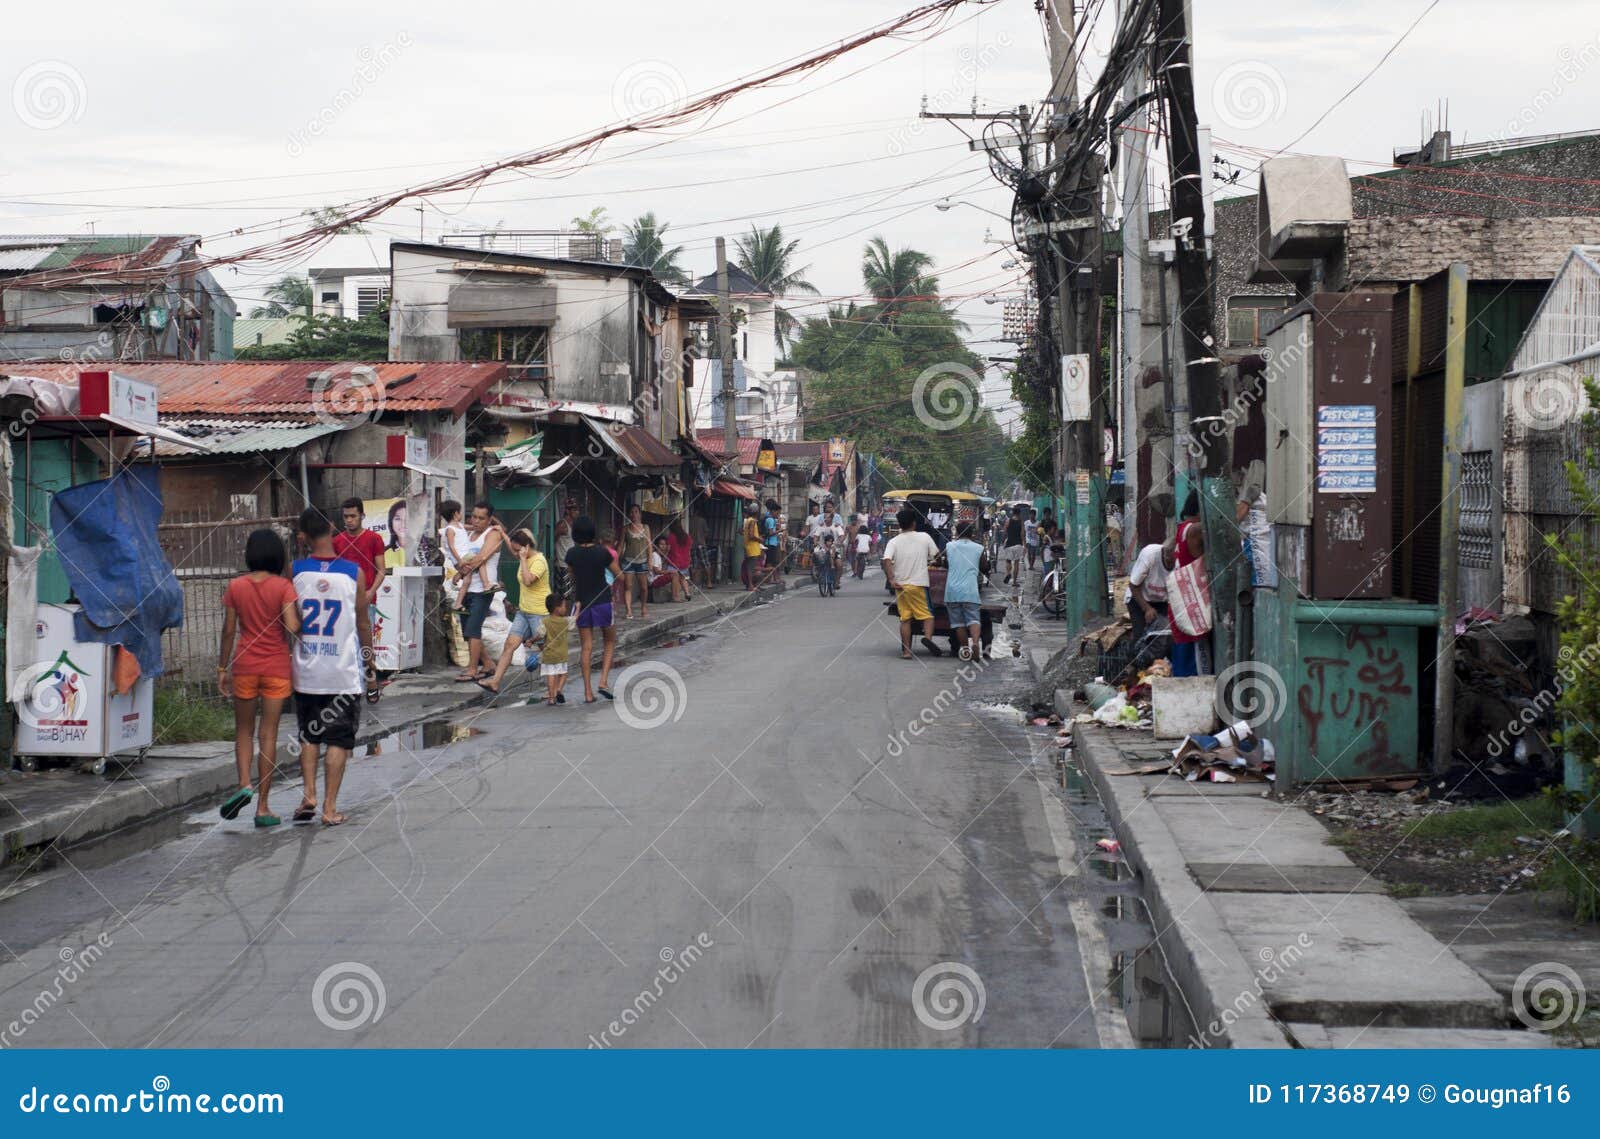 filipino-people-having-their-life-streets-manila-filipino-people-having-their-life-streets-manila-117368749.jpg